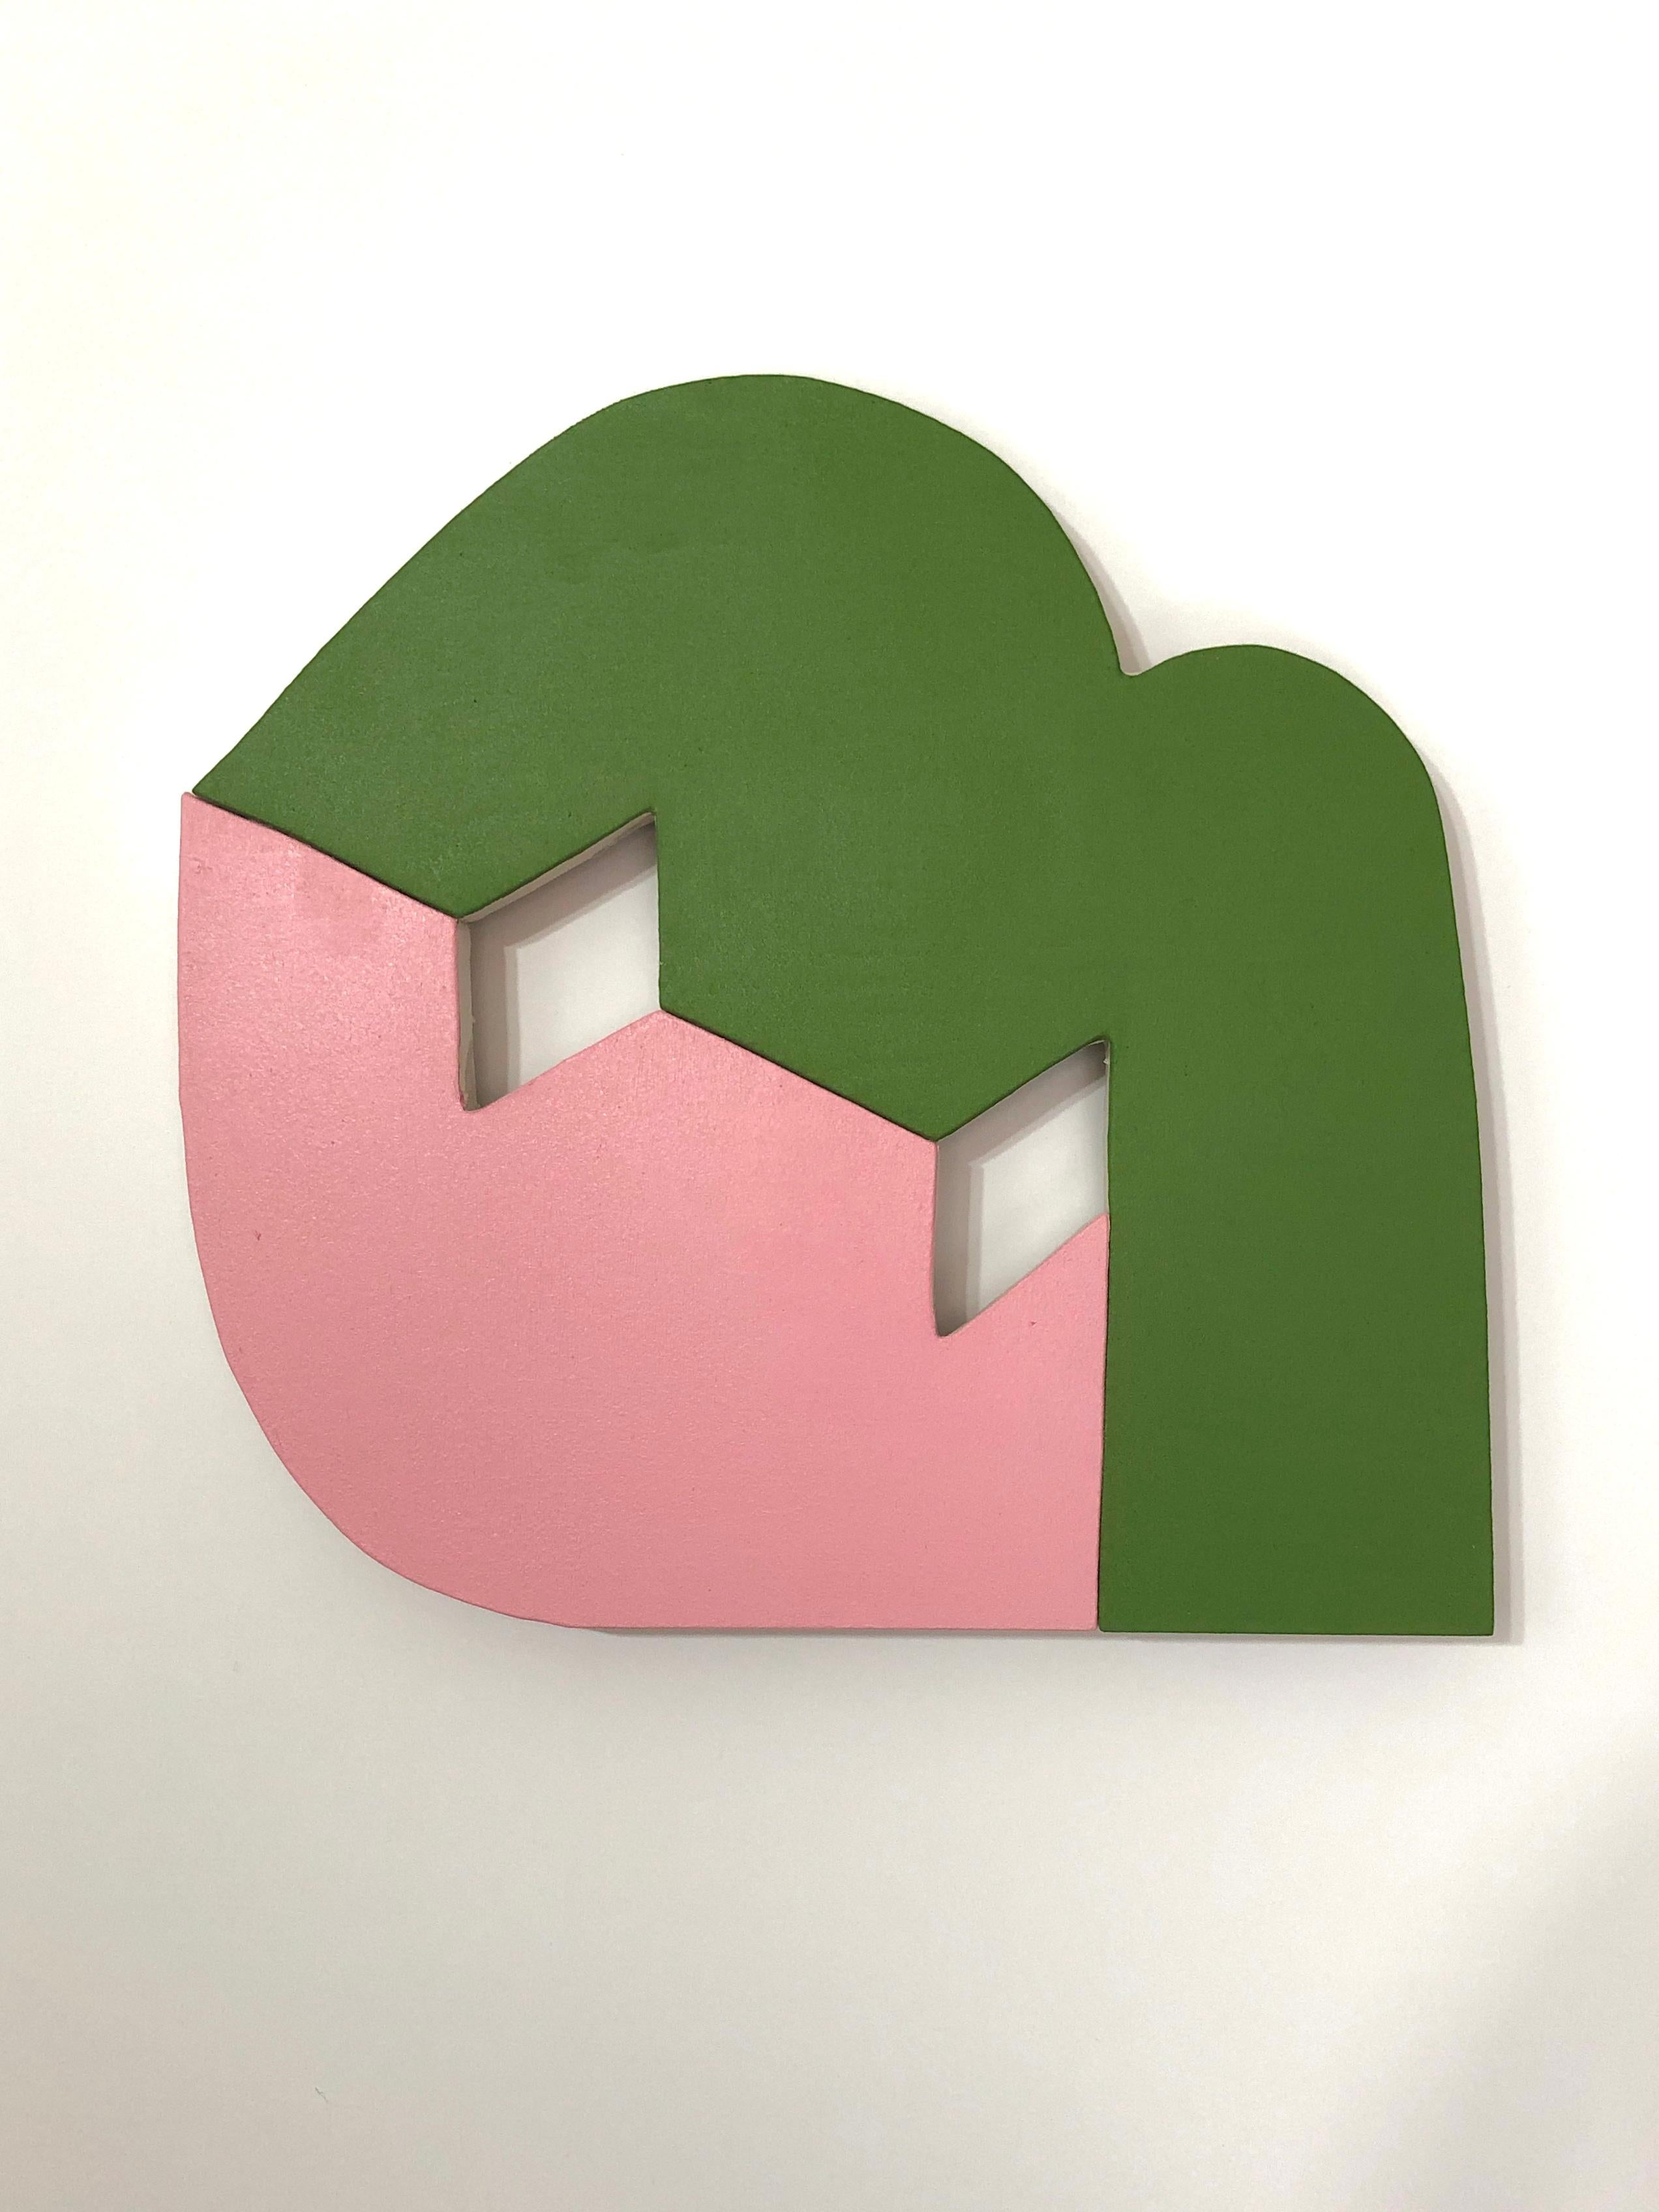 Jason Matherly Abstract Sculpture - "21-8" Mixed Media Wall Sculpture painting- pink, green, minimalism, bold, small